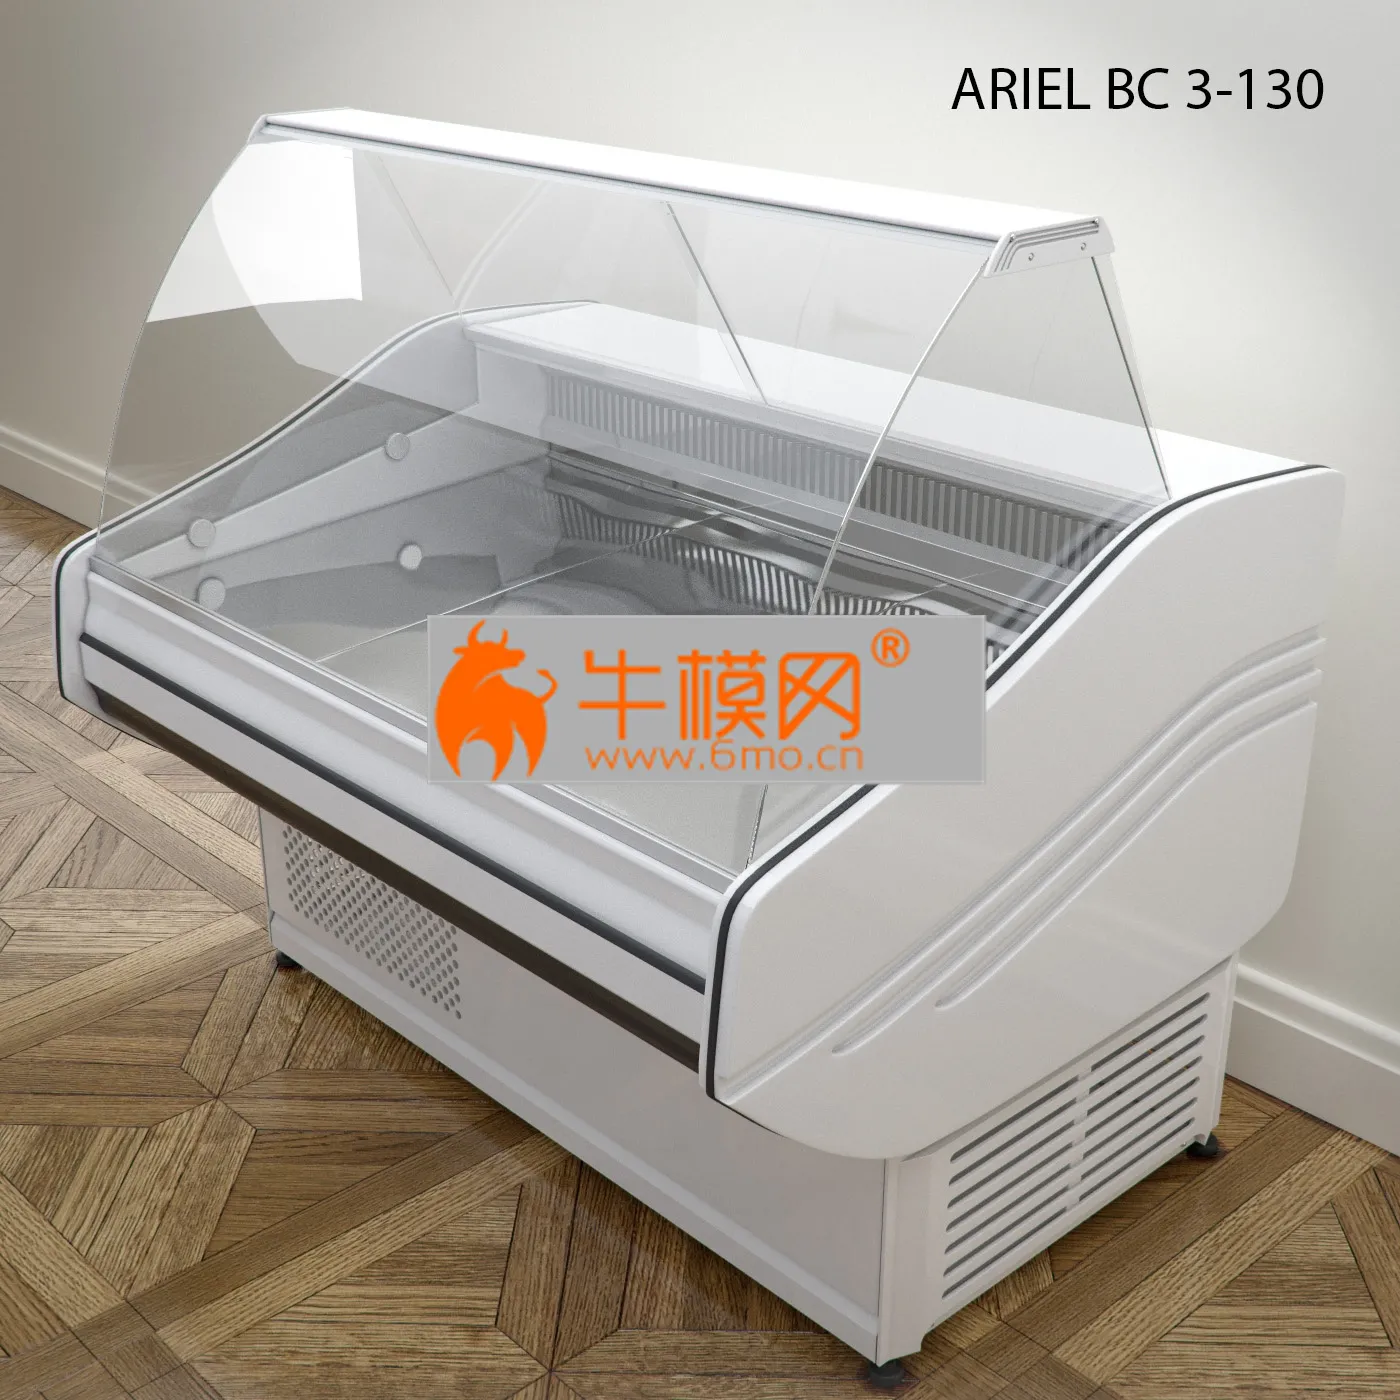 Refrigerated showcase ARIEL ?? 3-130 – 2629